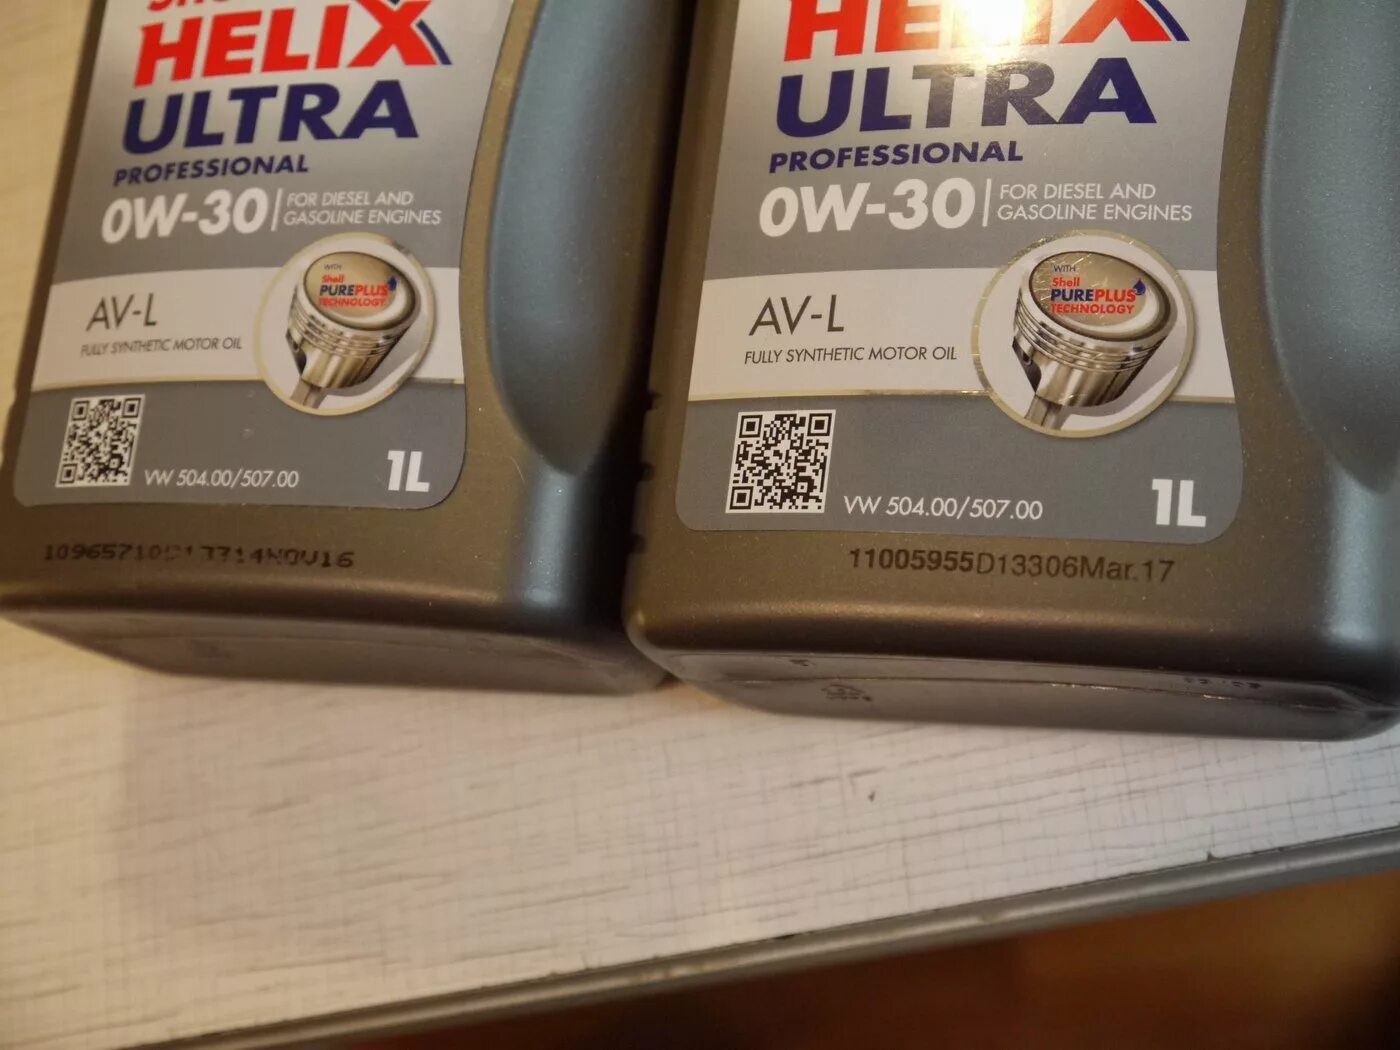 Helix ultra professional av. Helix Ultra professional av-l 0w-30. Shell Helix Ultra Pro af 5w-30 1l. Shell Helix Ultra professional av-l. Helix Ultra professional av-l 0w-20 5л артикул.